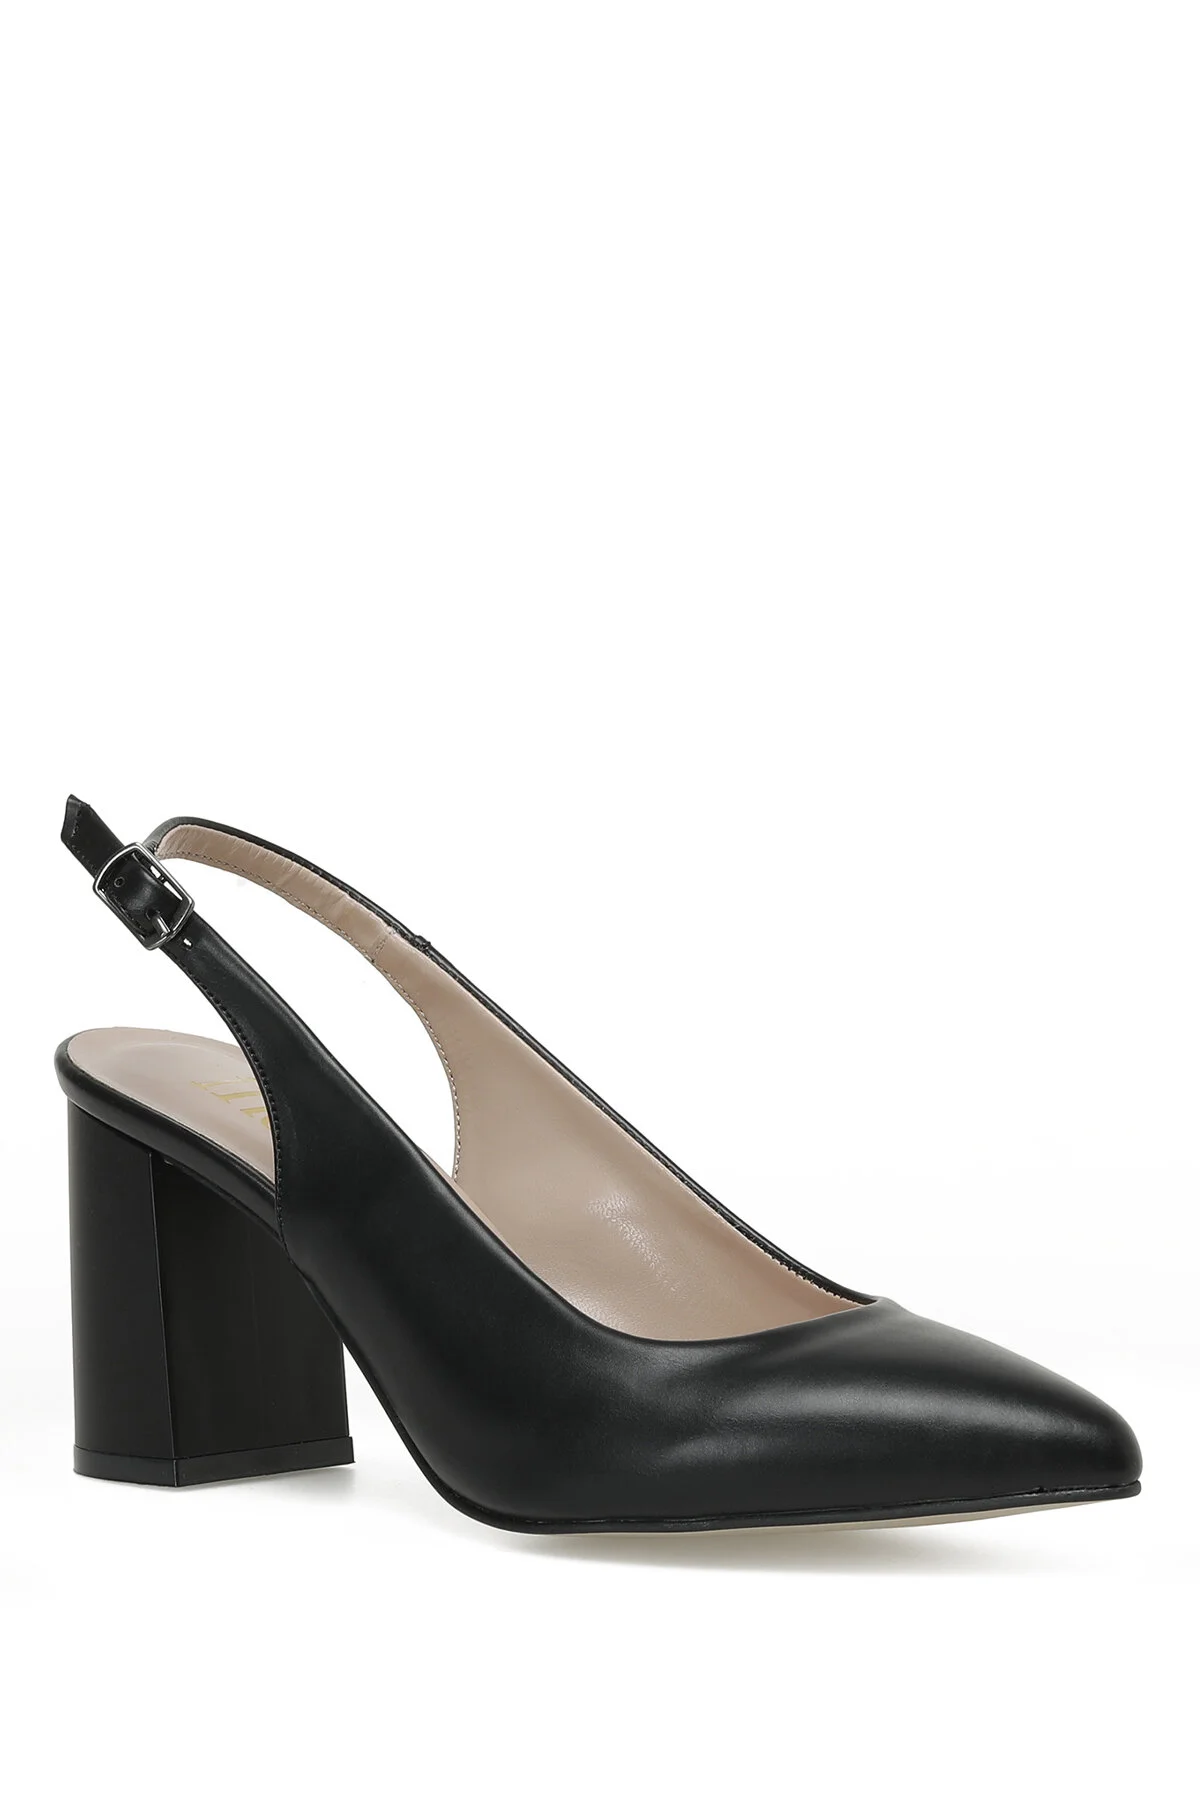 İNCİ - TESSA 3FX Kadın Topuklu Ayakkabı-Siyah